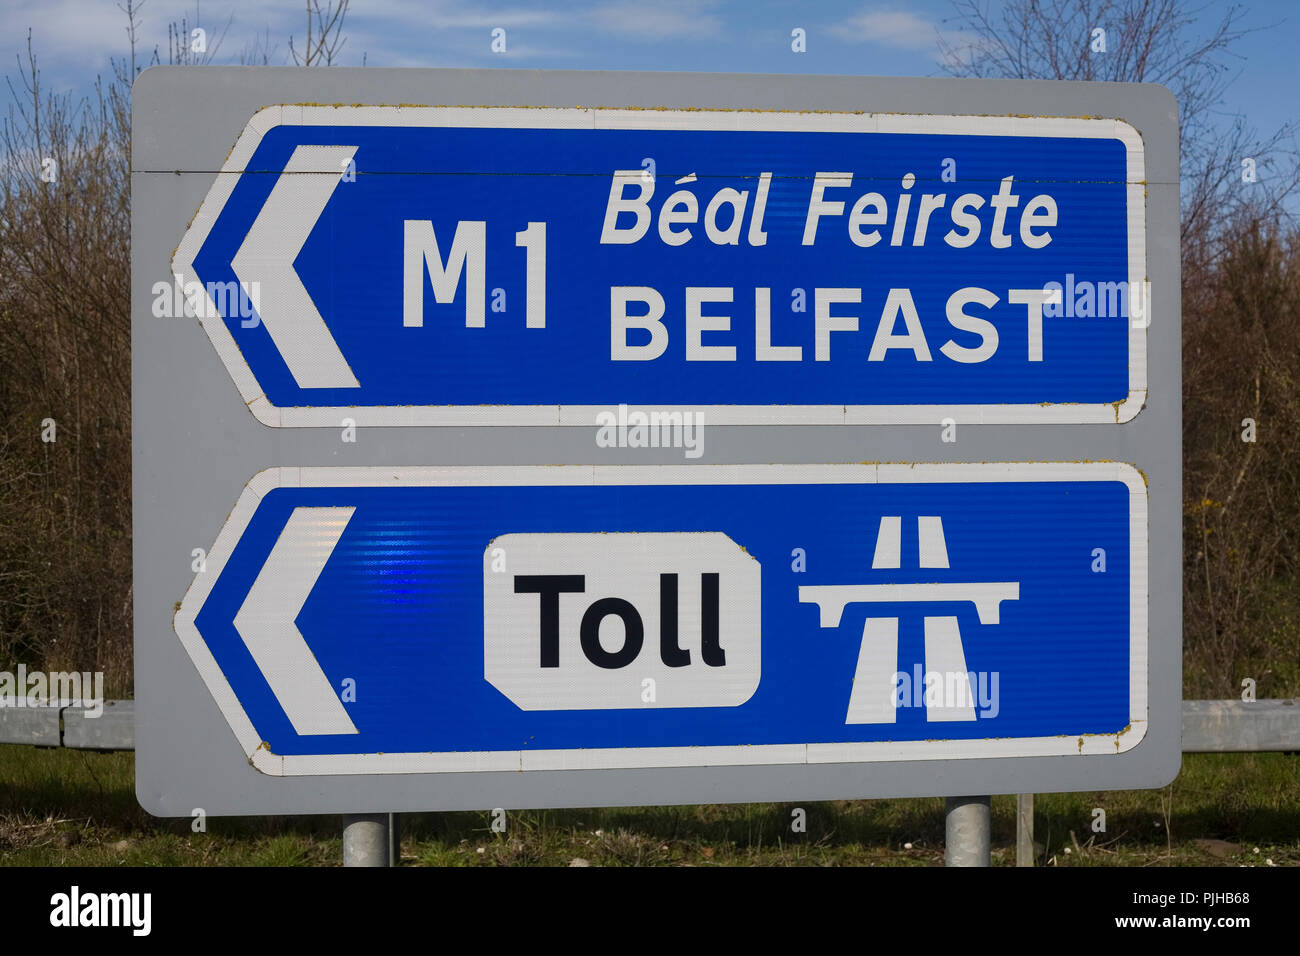 Sign in Ireland pointing towards toll M1 motorway towards Belfast Stock Photo